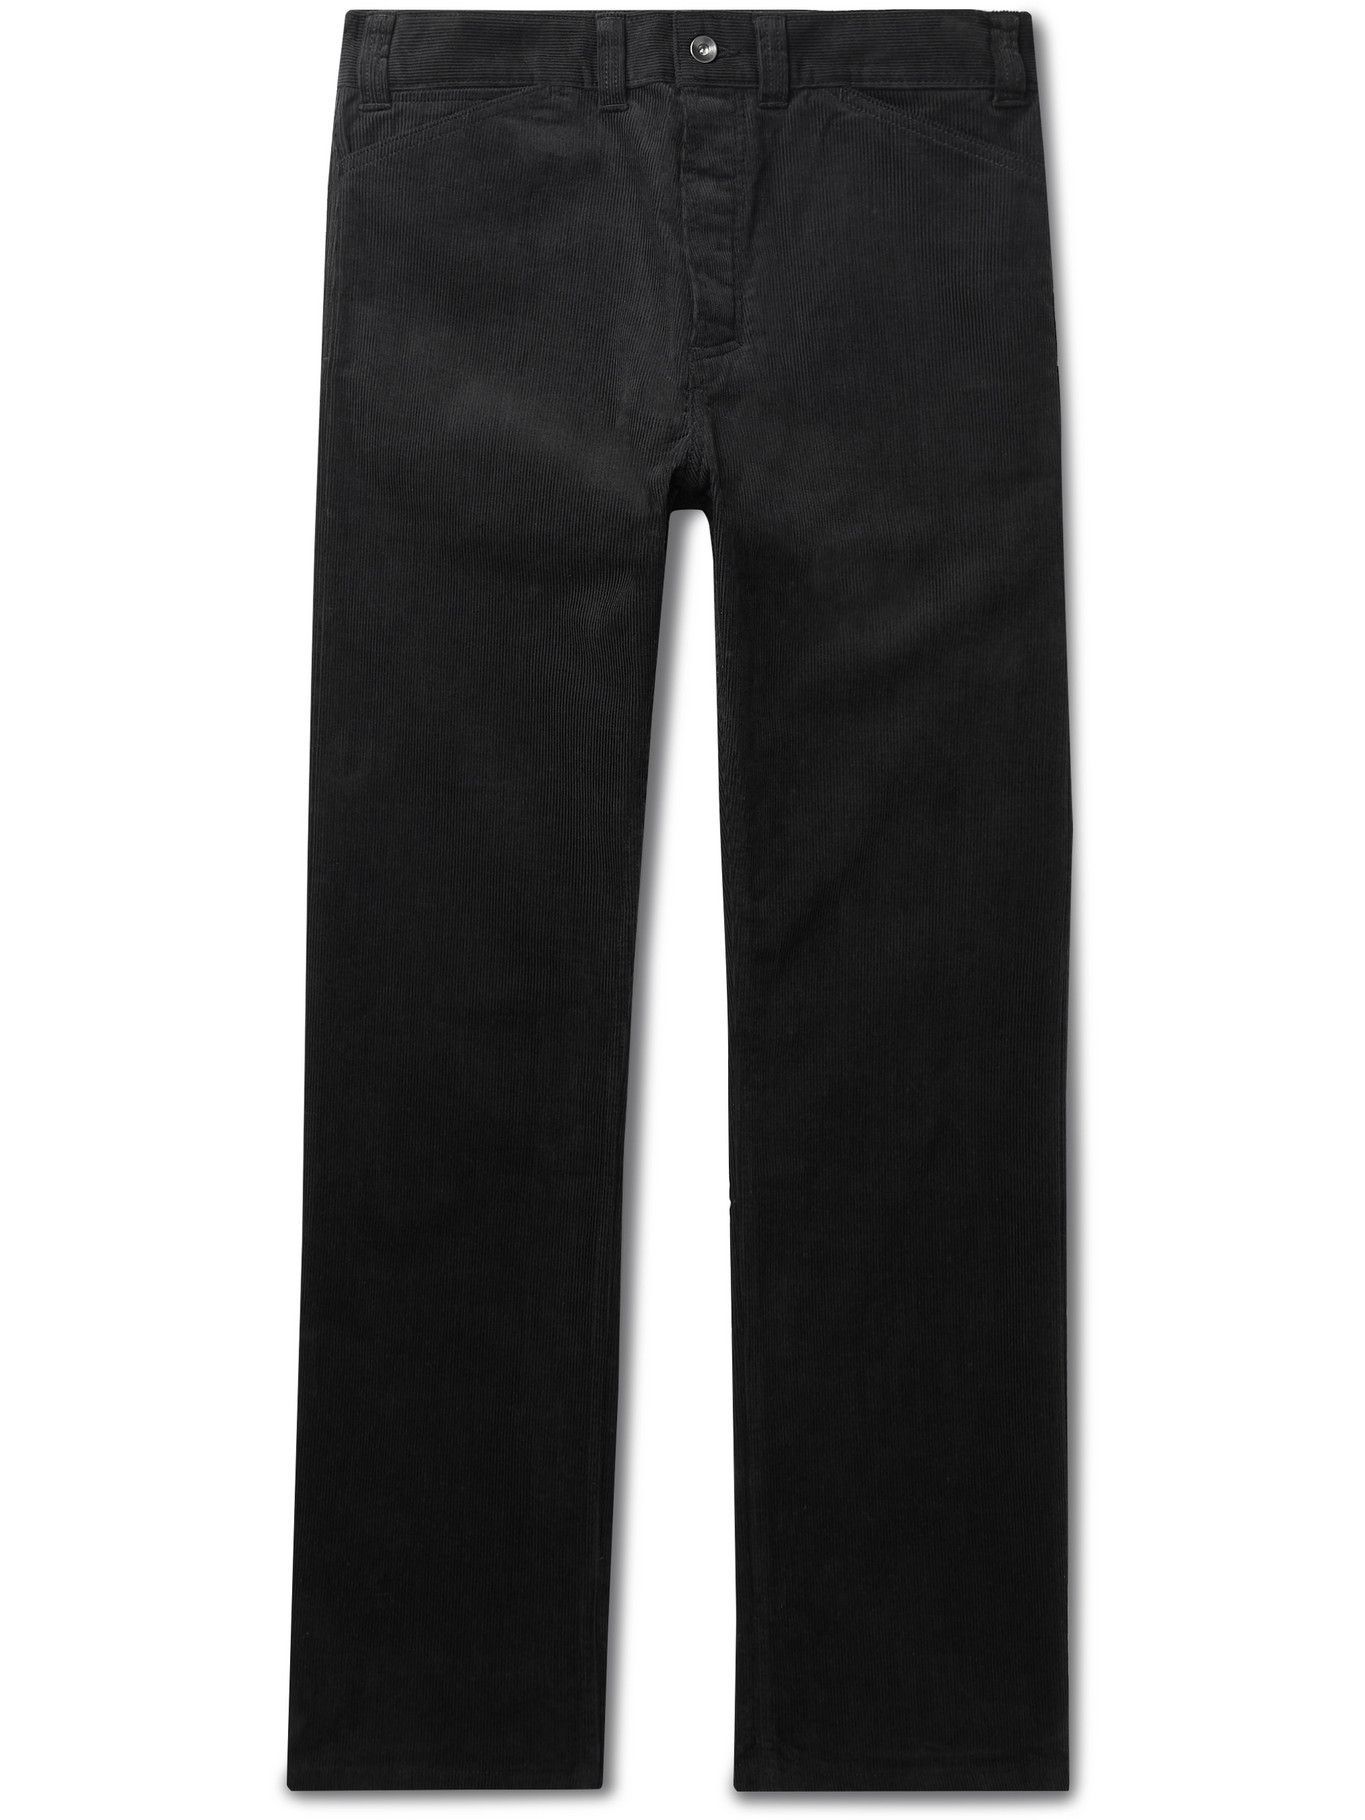 L.E.J - Cotton-Corduroy Trousers - Black L.E.J